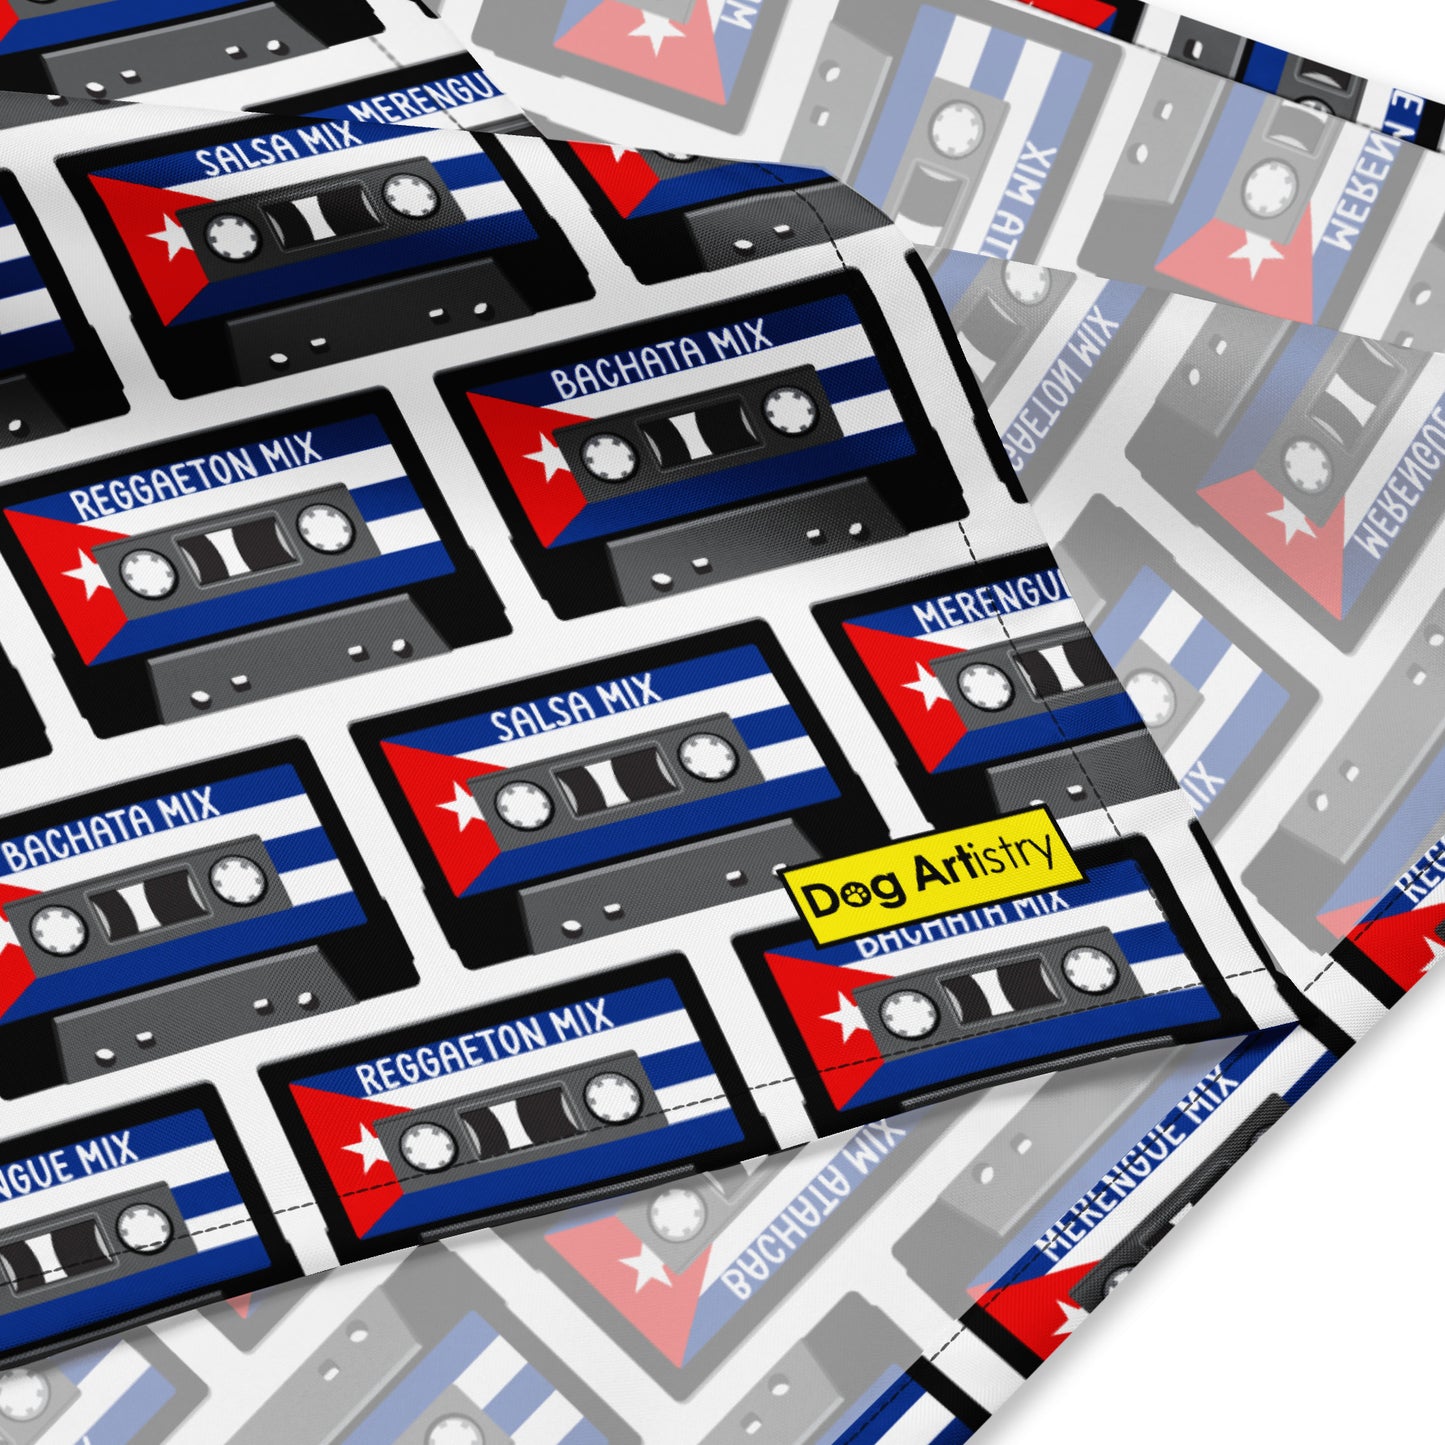 Cuban Flag Salsa, Merengue, Bachata, Reggaeton Cassette Tapes All-over print bandana